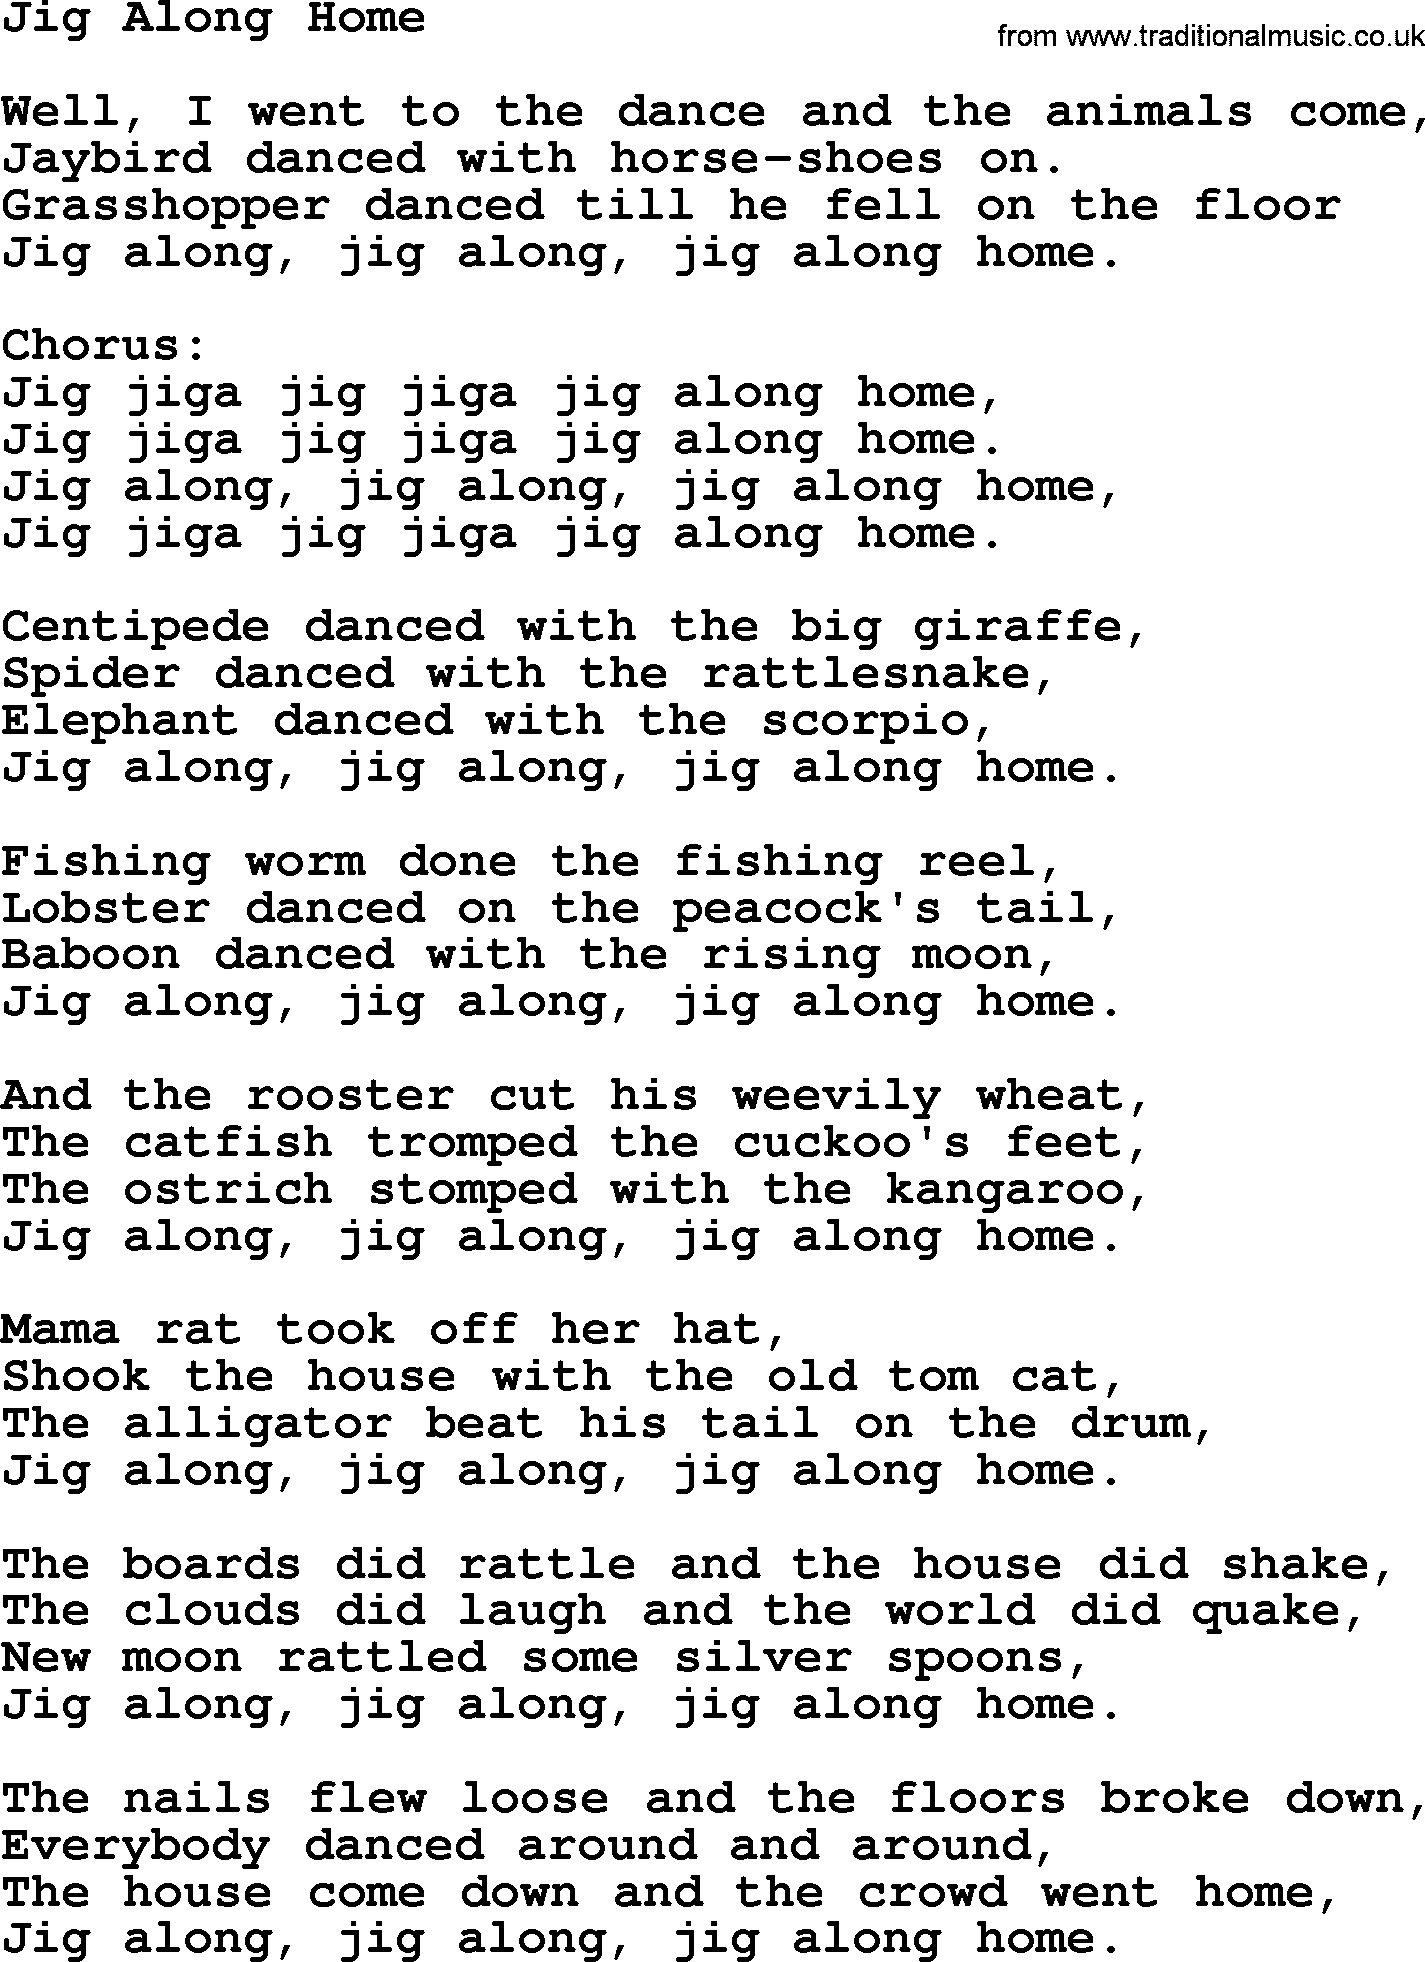 Woody Guthrie song Jig Along Home lyrics